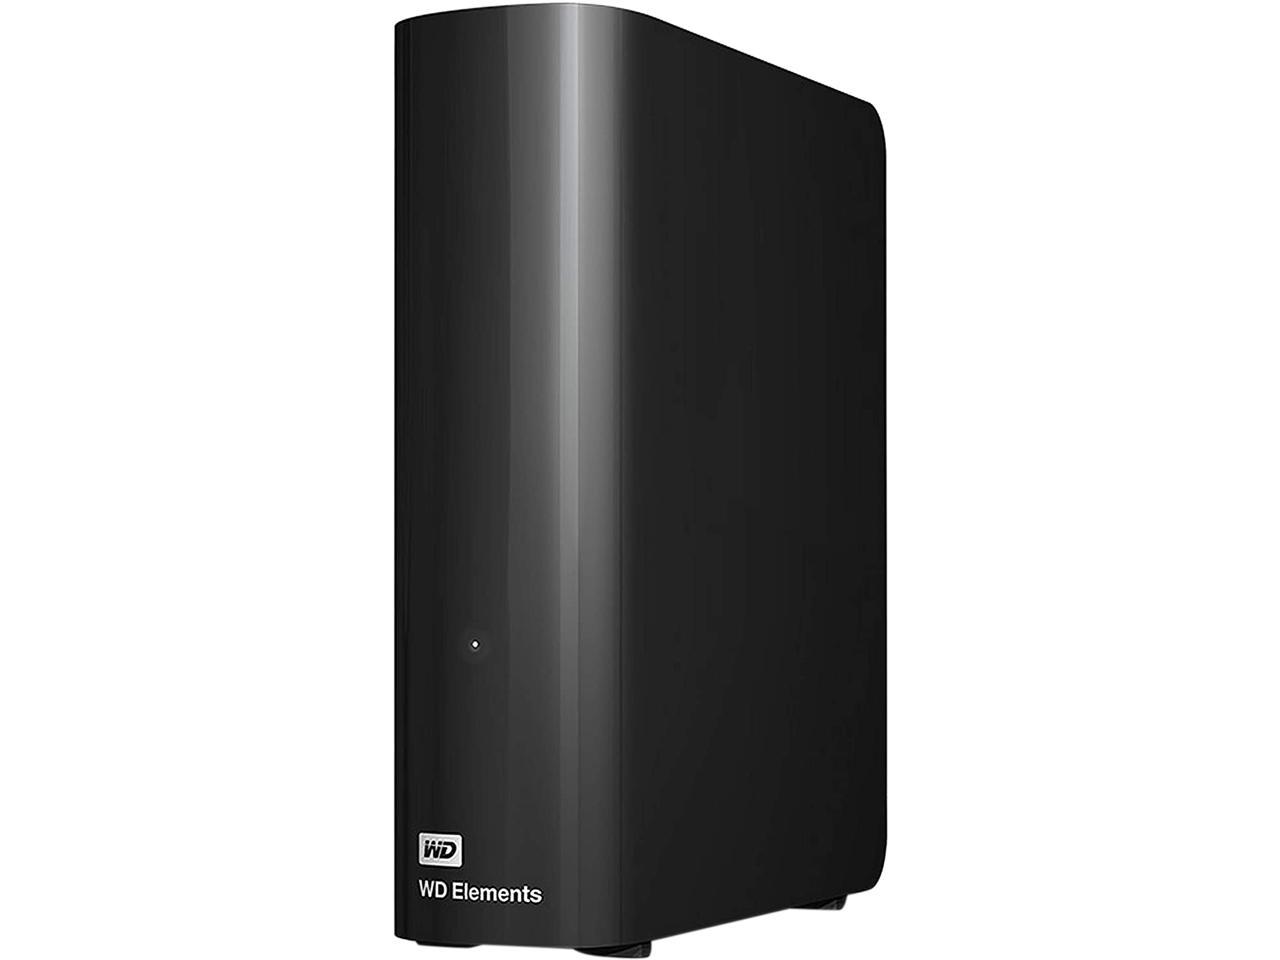 16TB WD Elements Desktop External Hard Drive $240